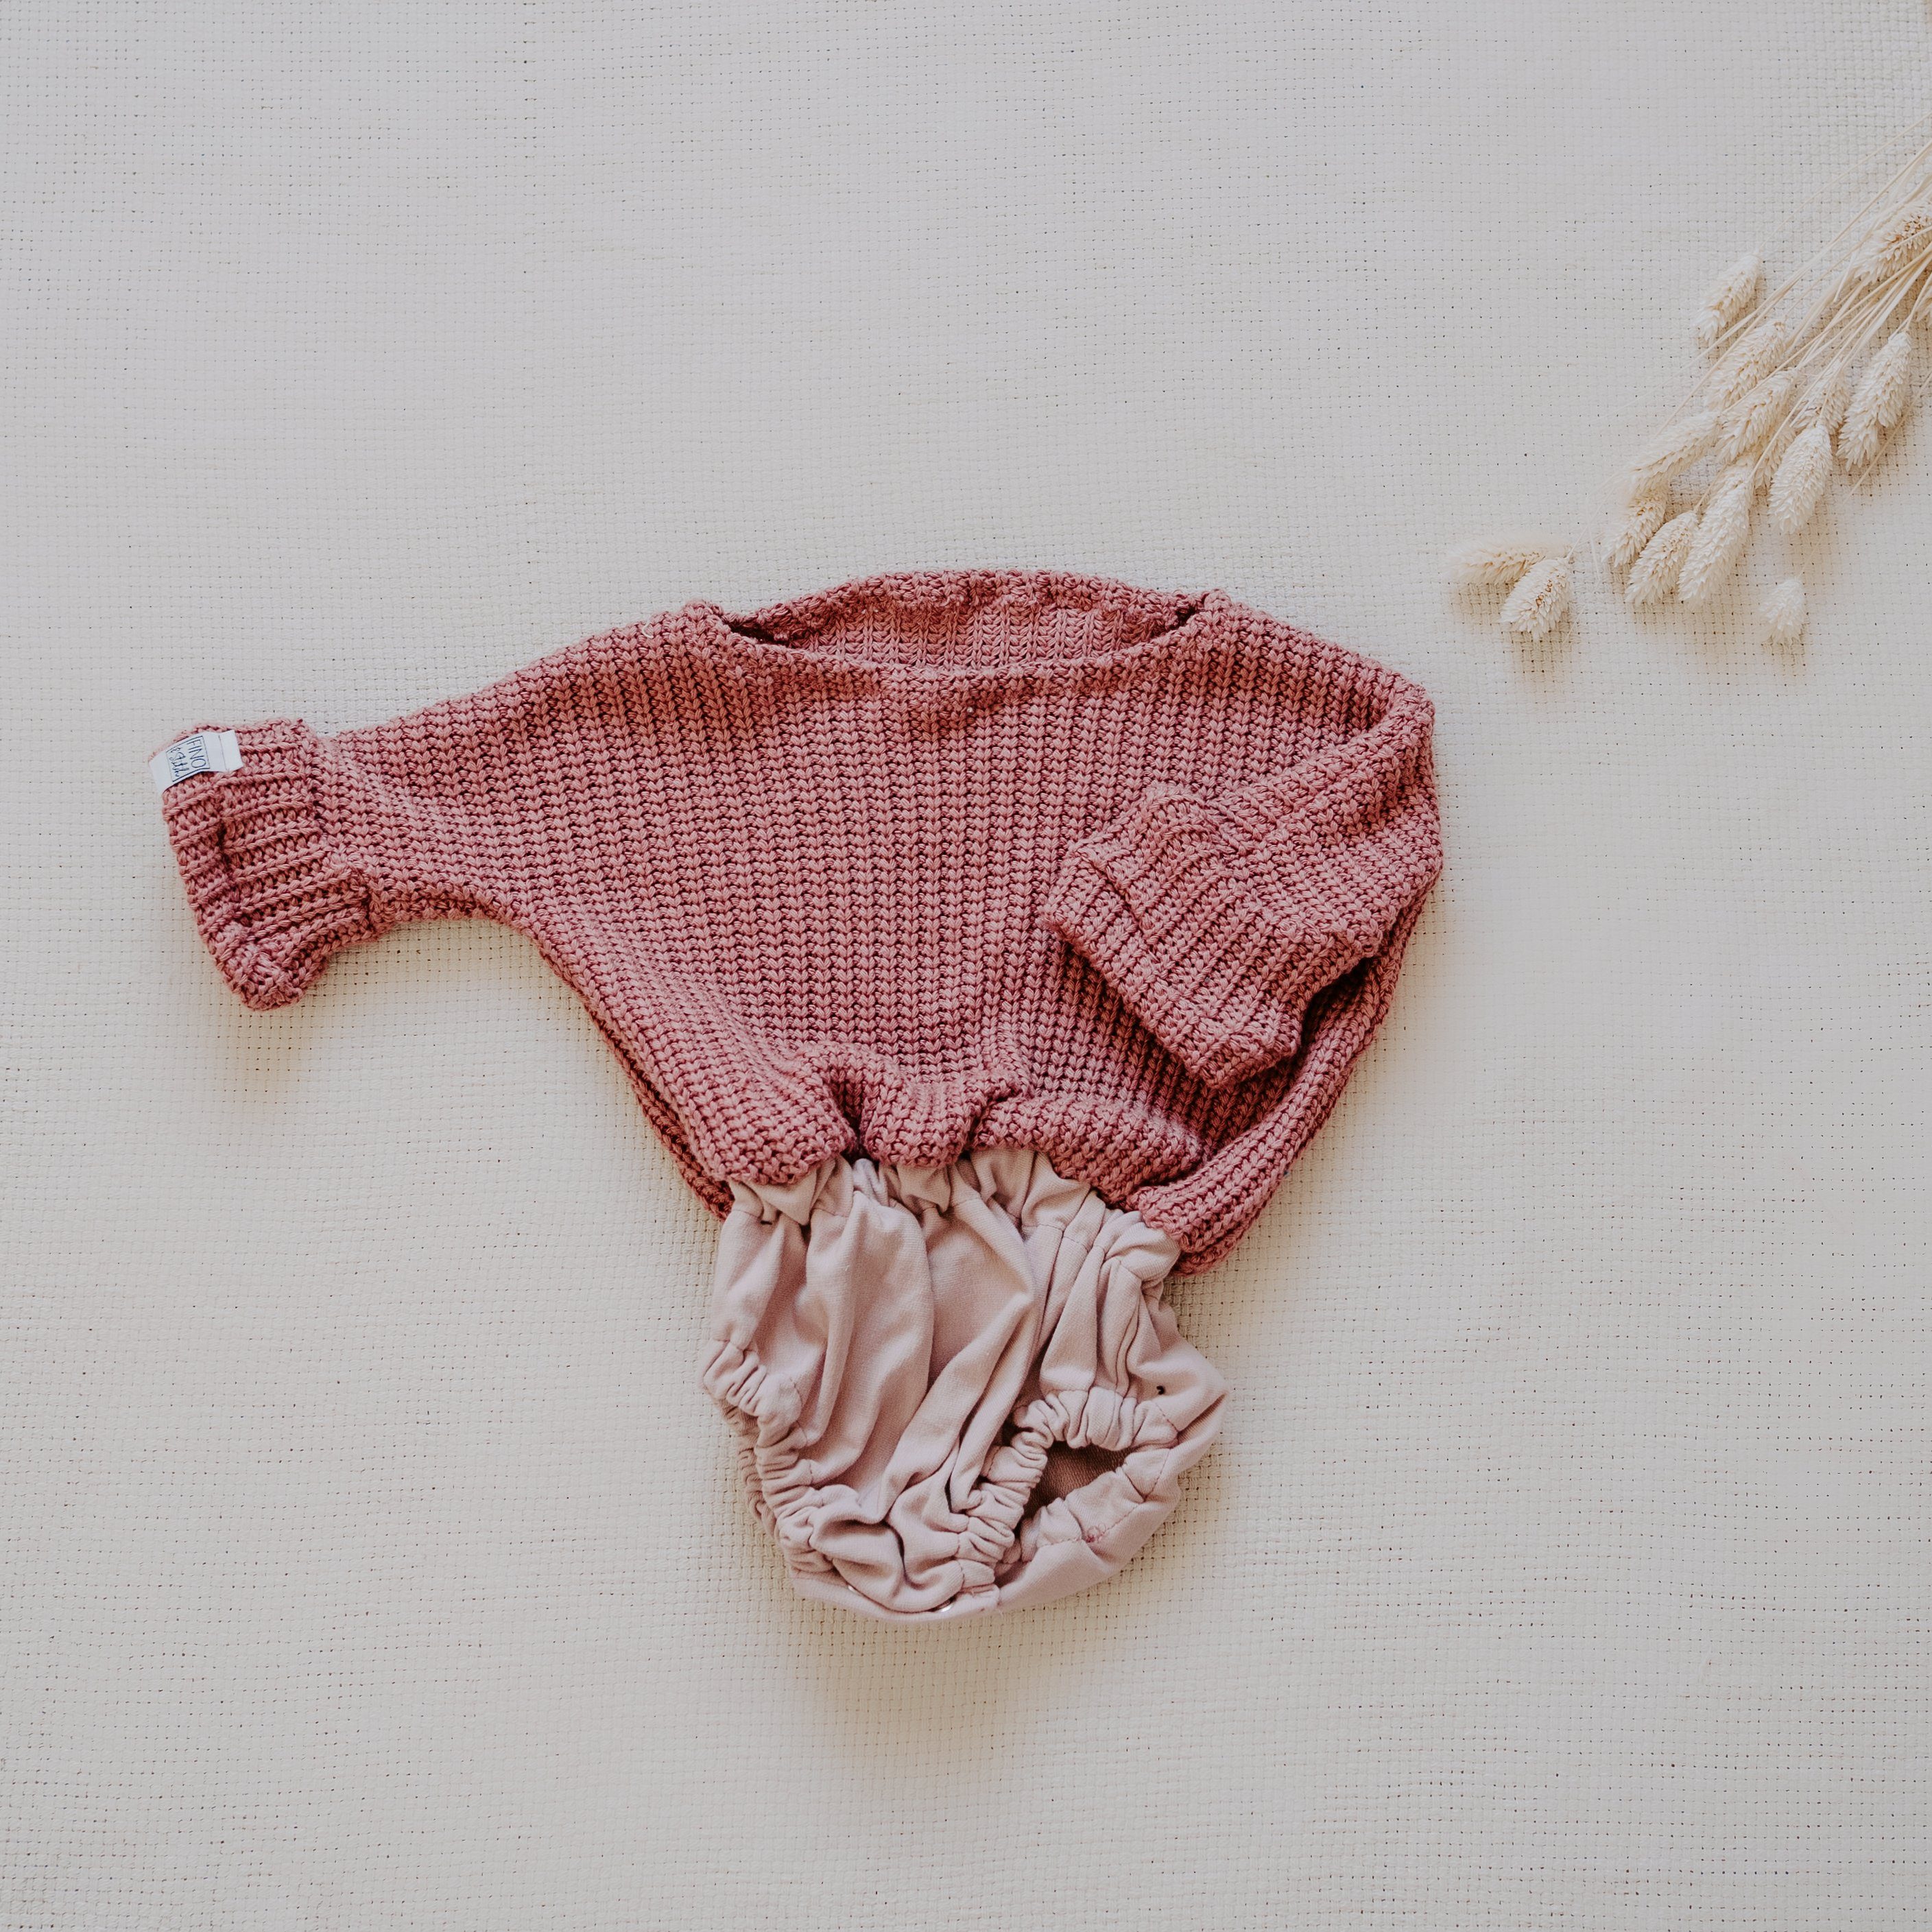 Nähset & Kreativset zum DIY FINO - Strick - selbst Baby&Kids Pulli rosa nähen zugeschnitten Stitch